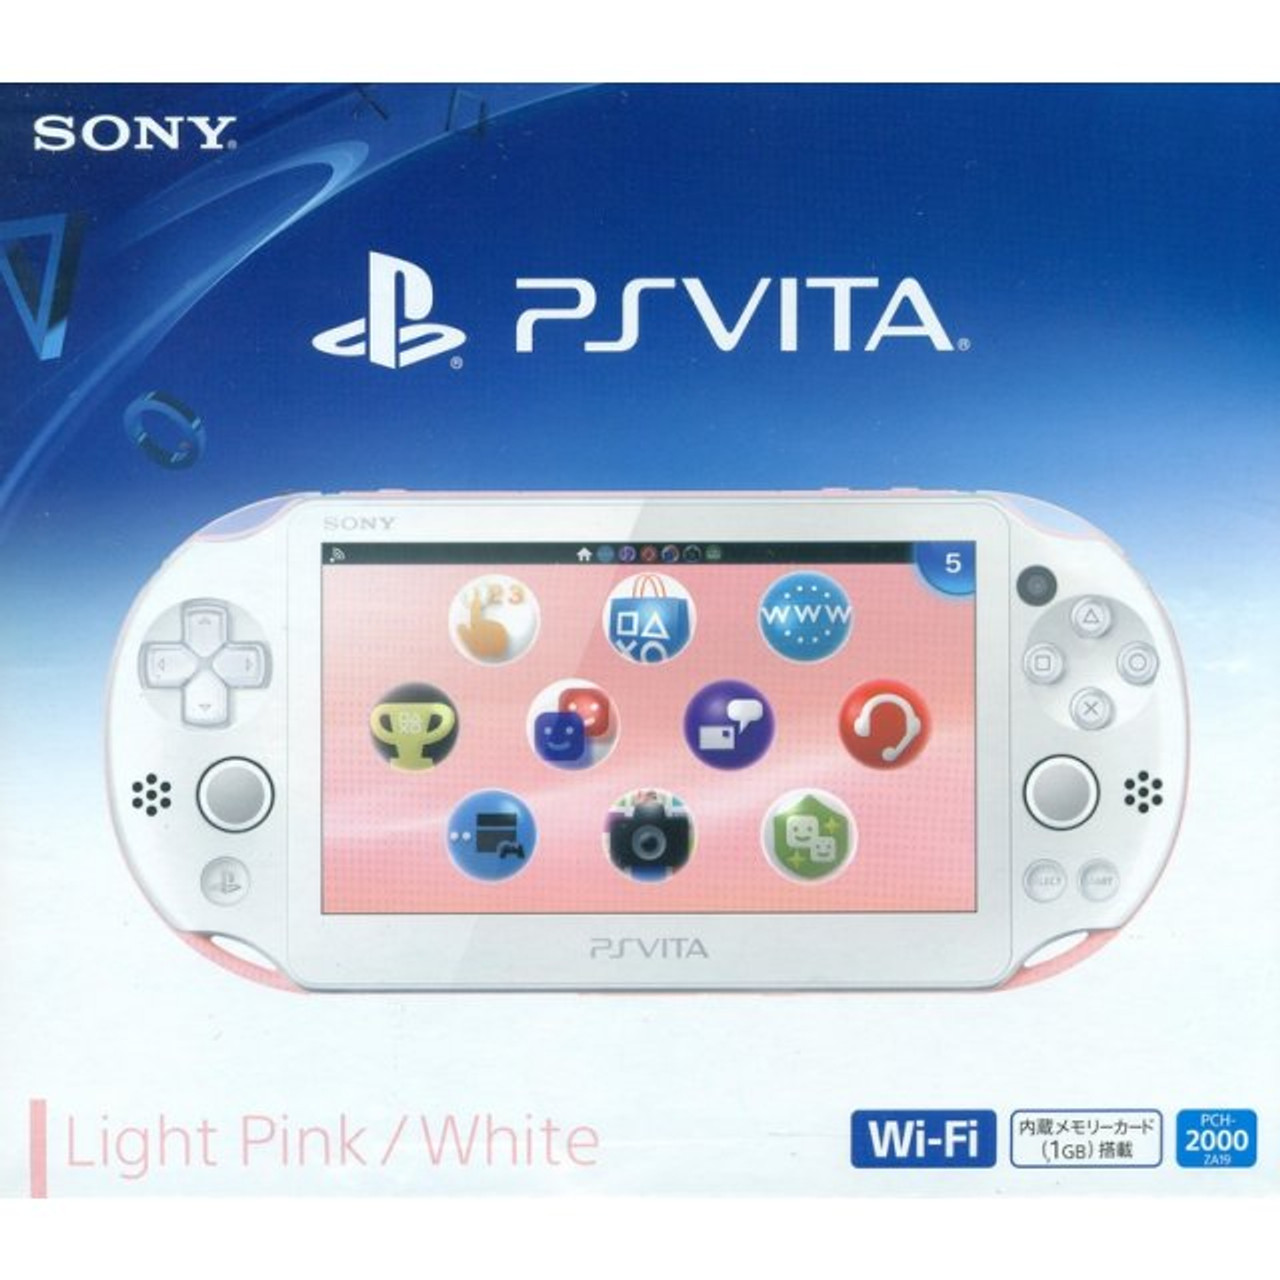 PS Vita Slim 2000 [LITE PINK / WHITE], PlayStation Vita ...